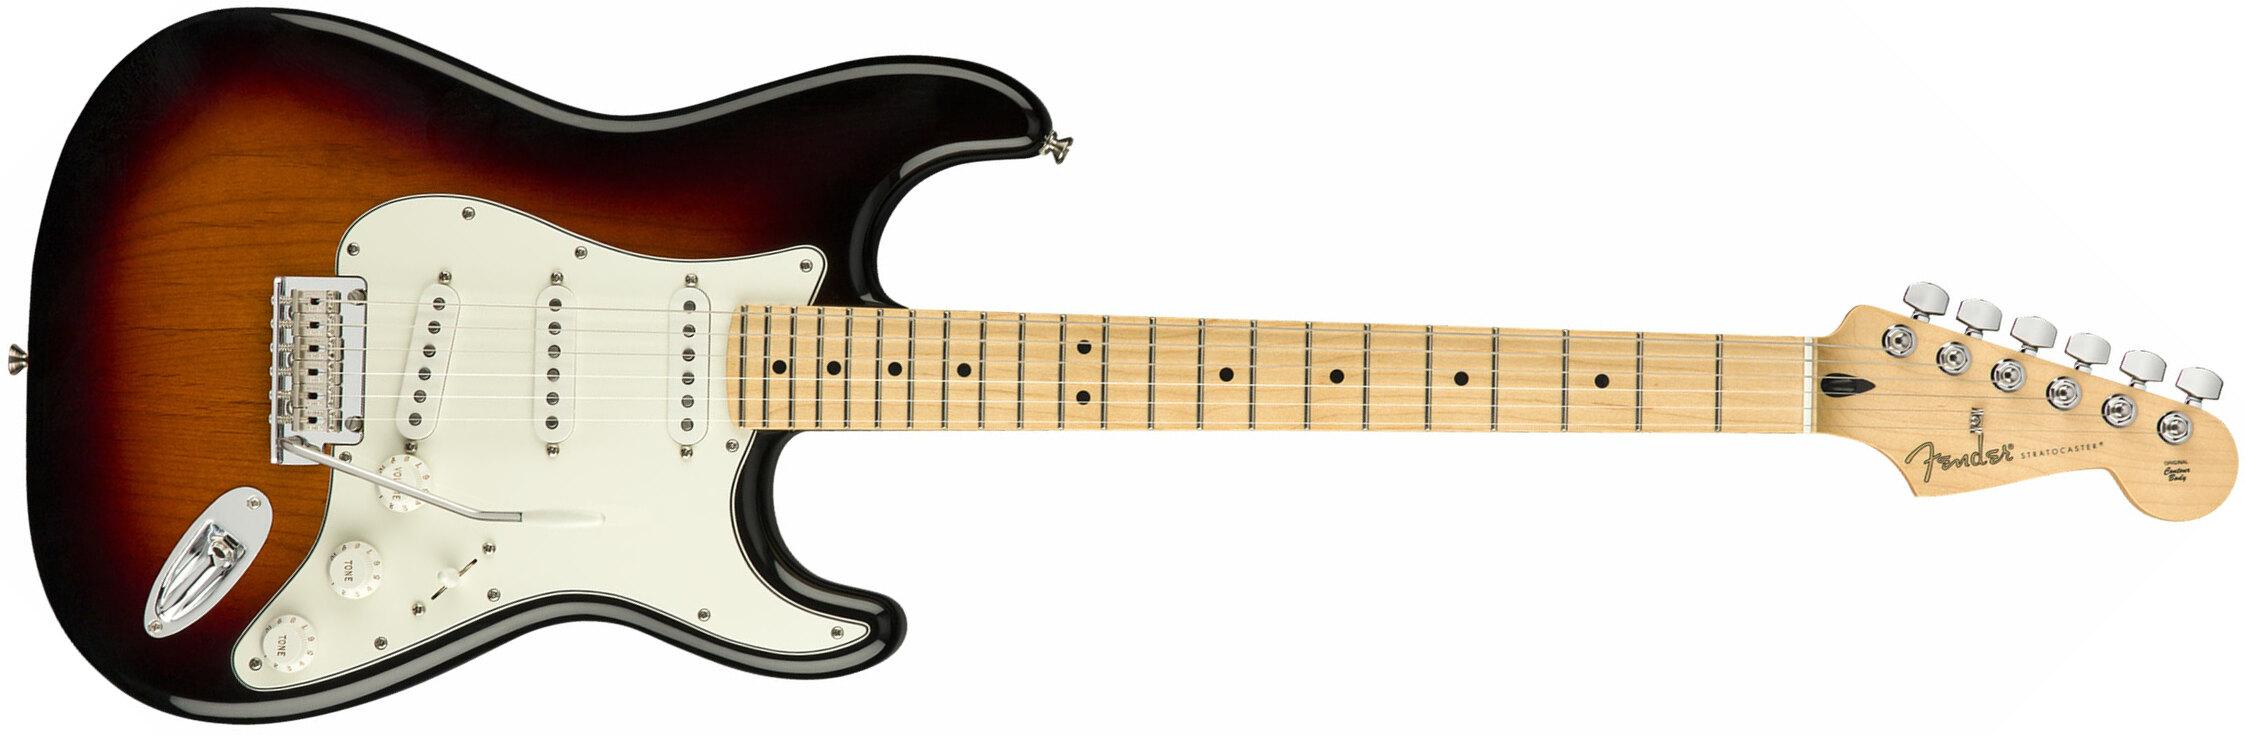 Fender Strat Player Mex Sss Mn - 3-color Sunburst - Str shape electric guitar - Main picture